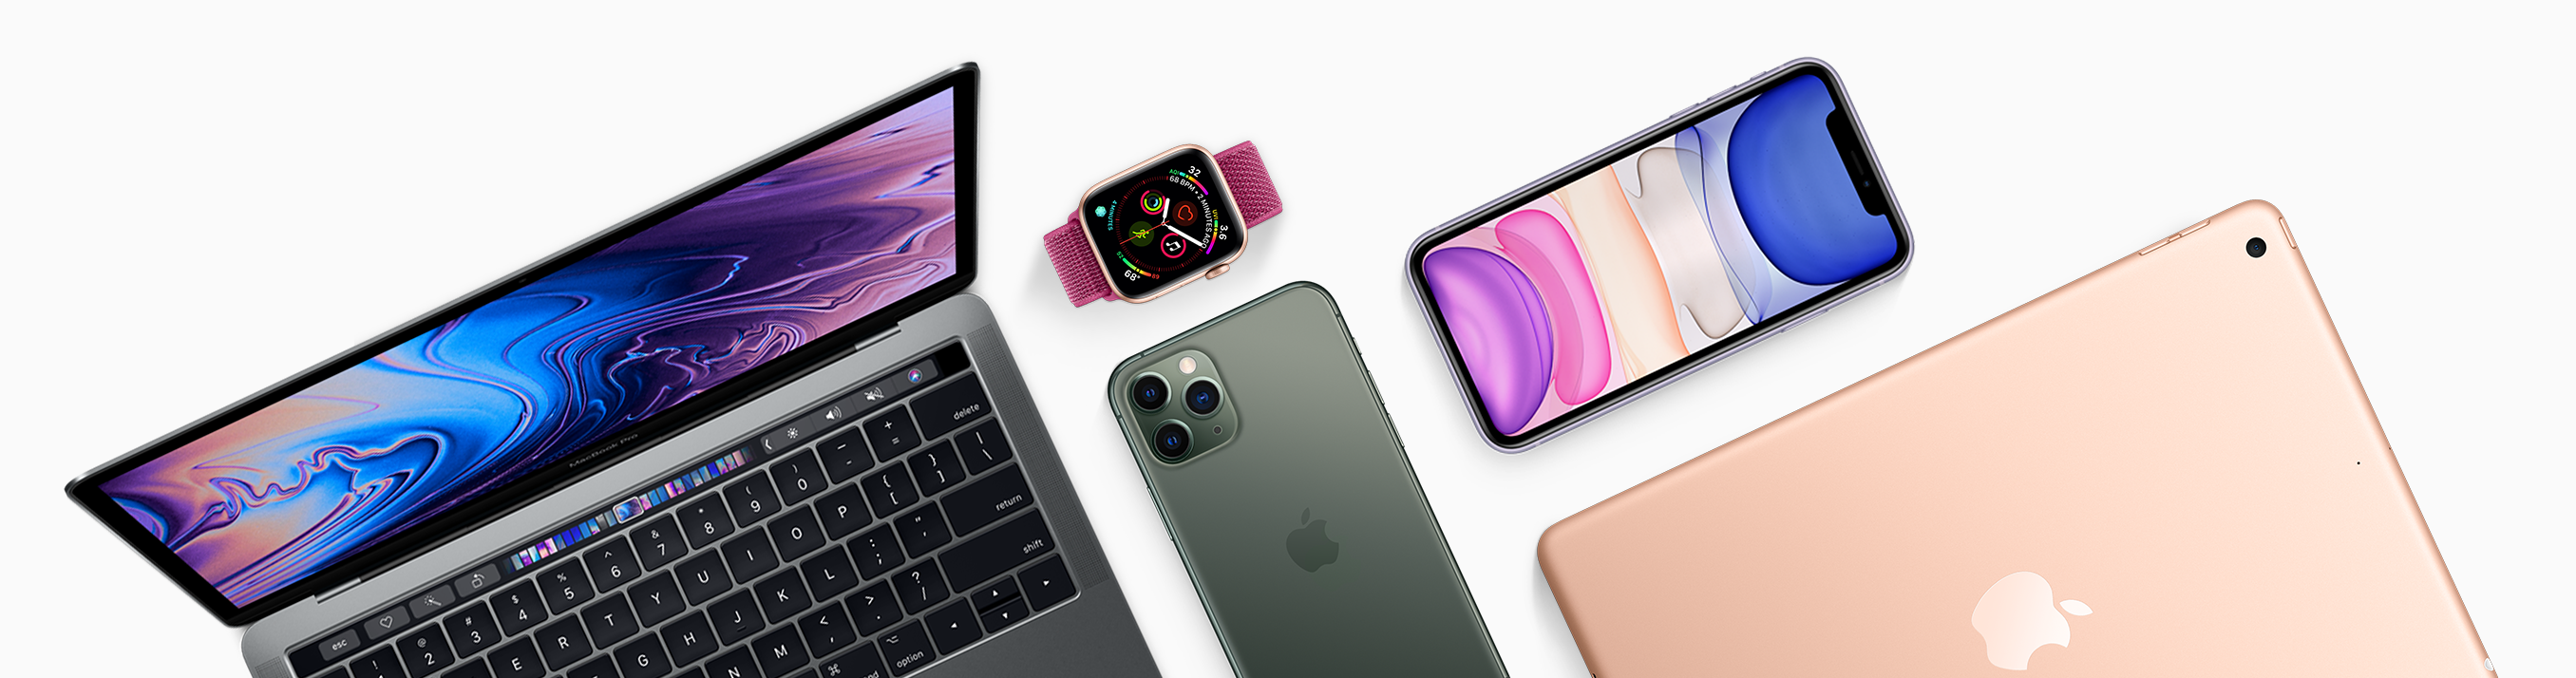 展示 MacBook、Apple Watch、iPhone、iPhone 及 iPad。